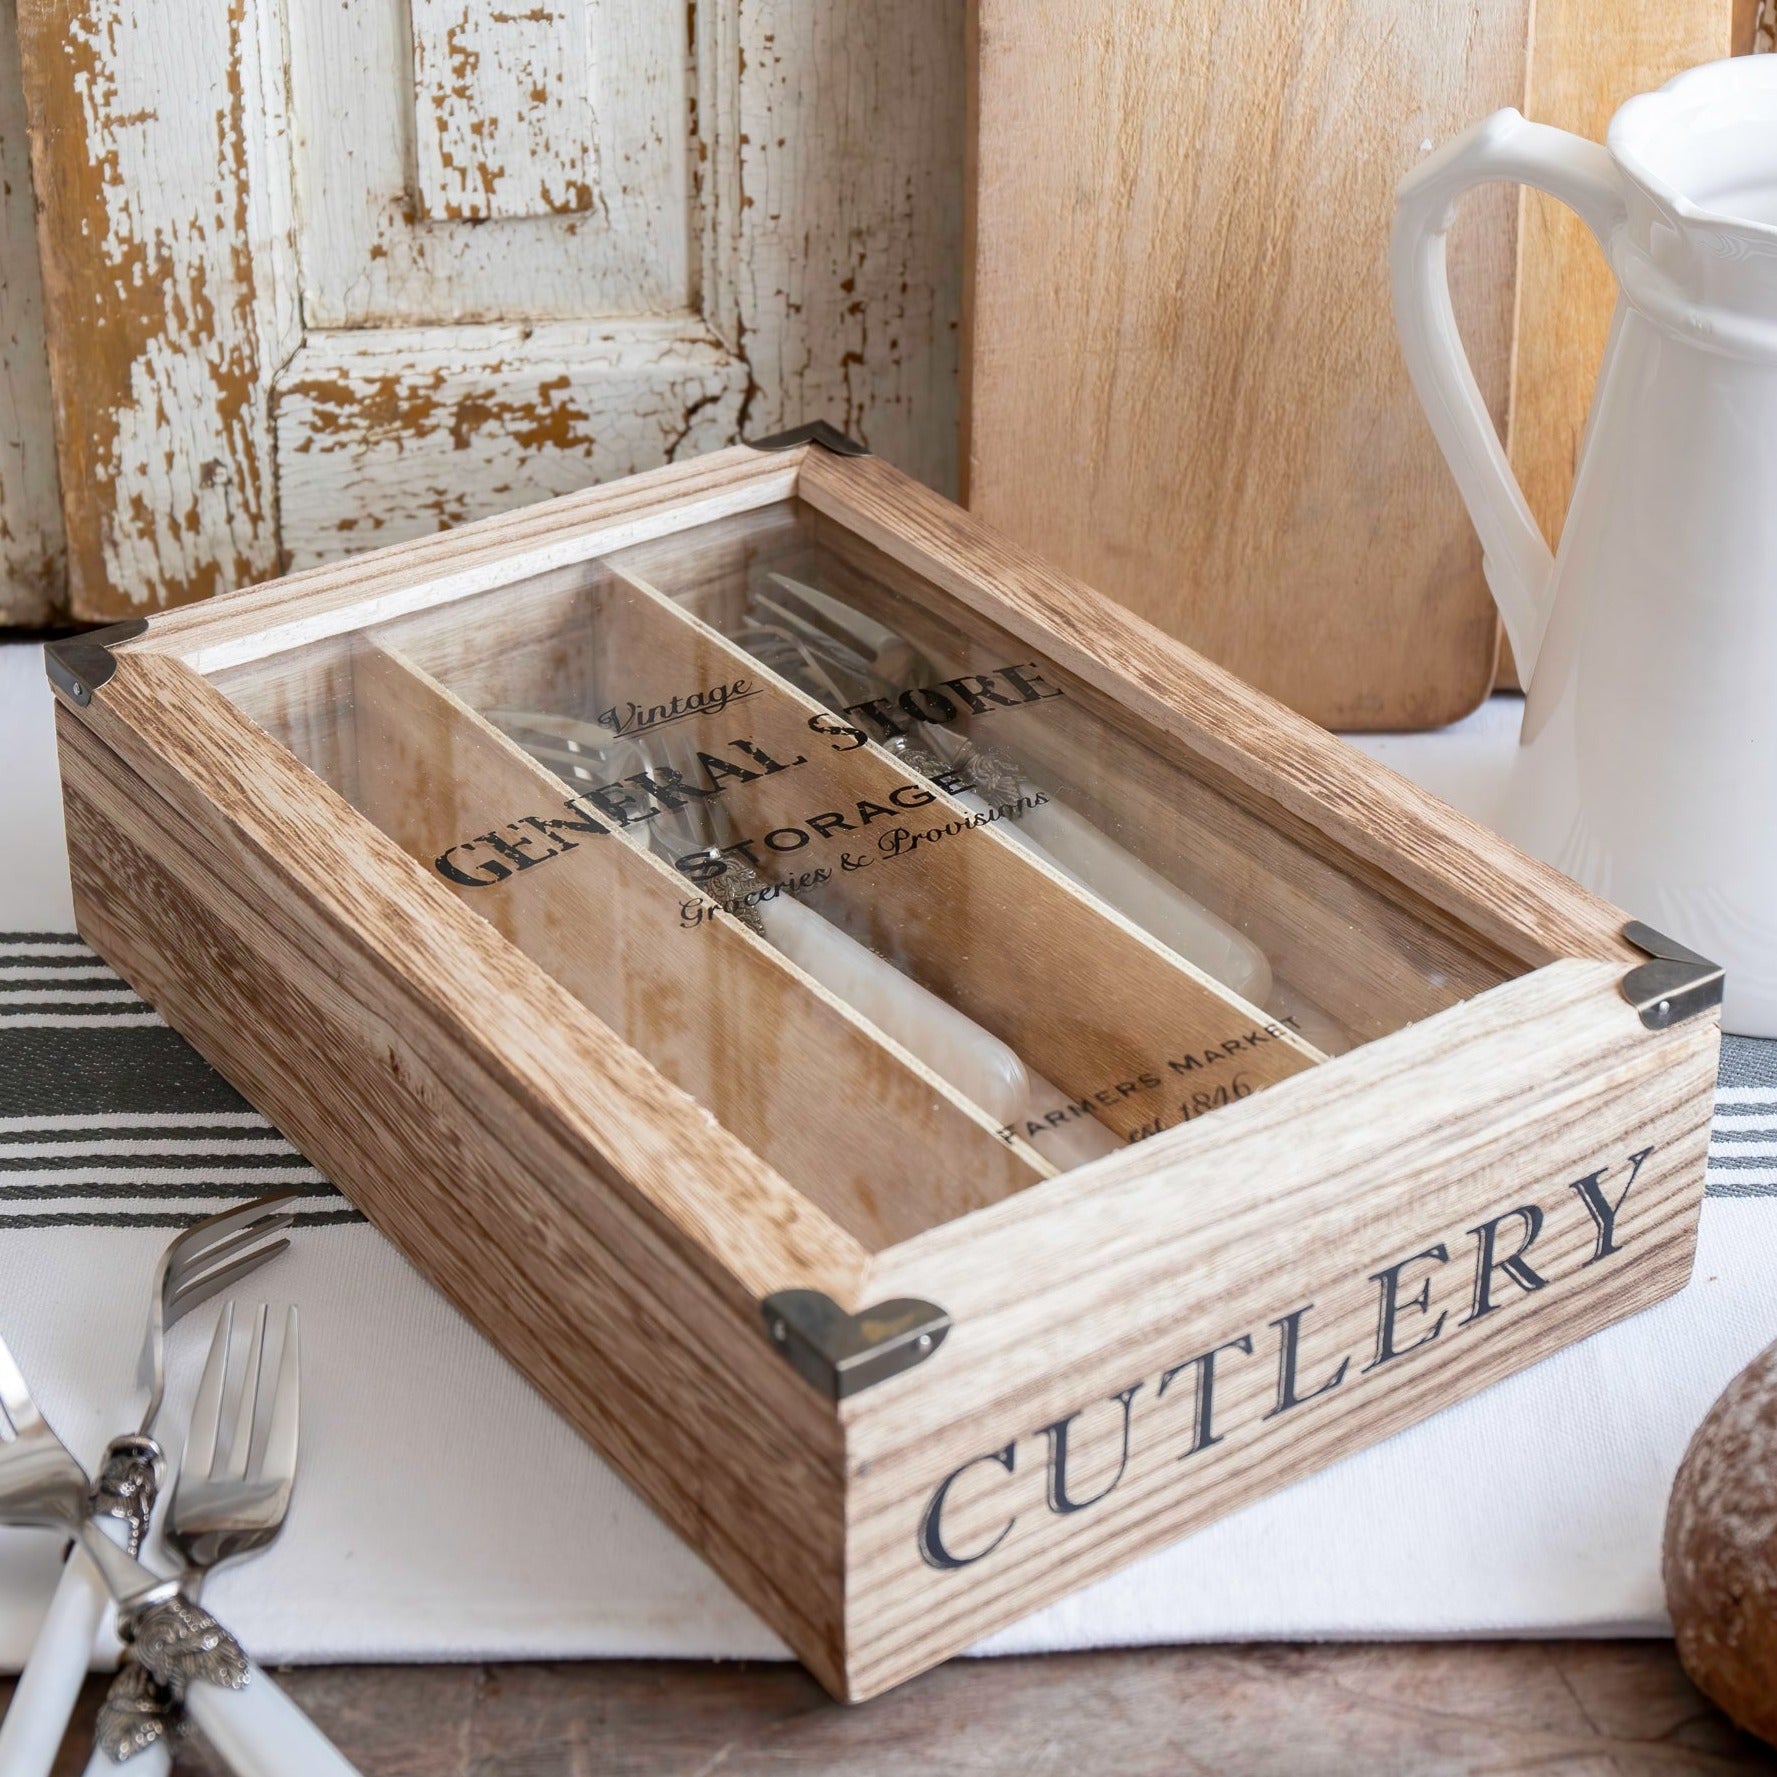 Rustic wooden 'Cutlery' box